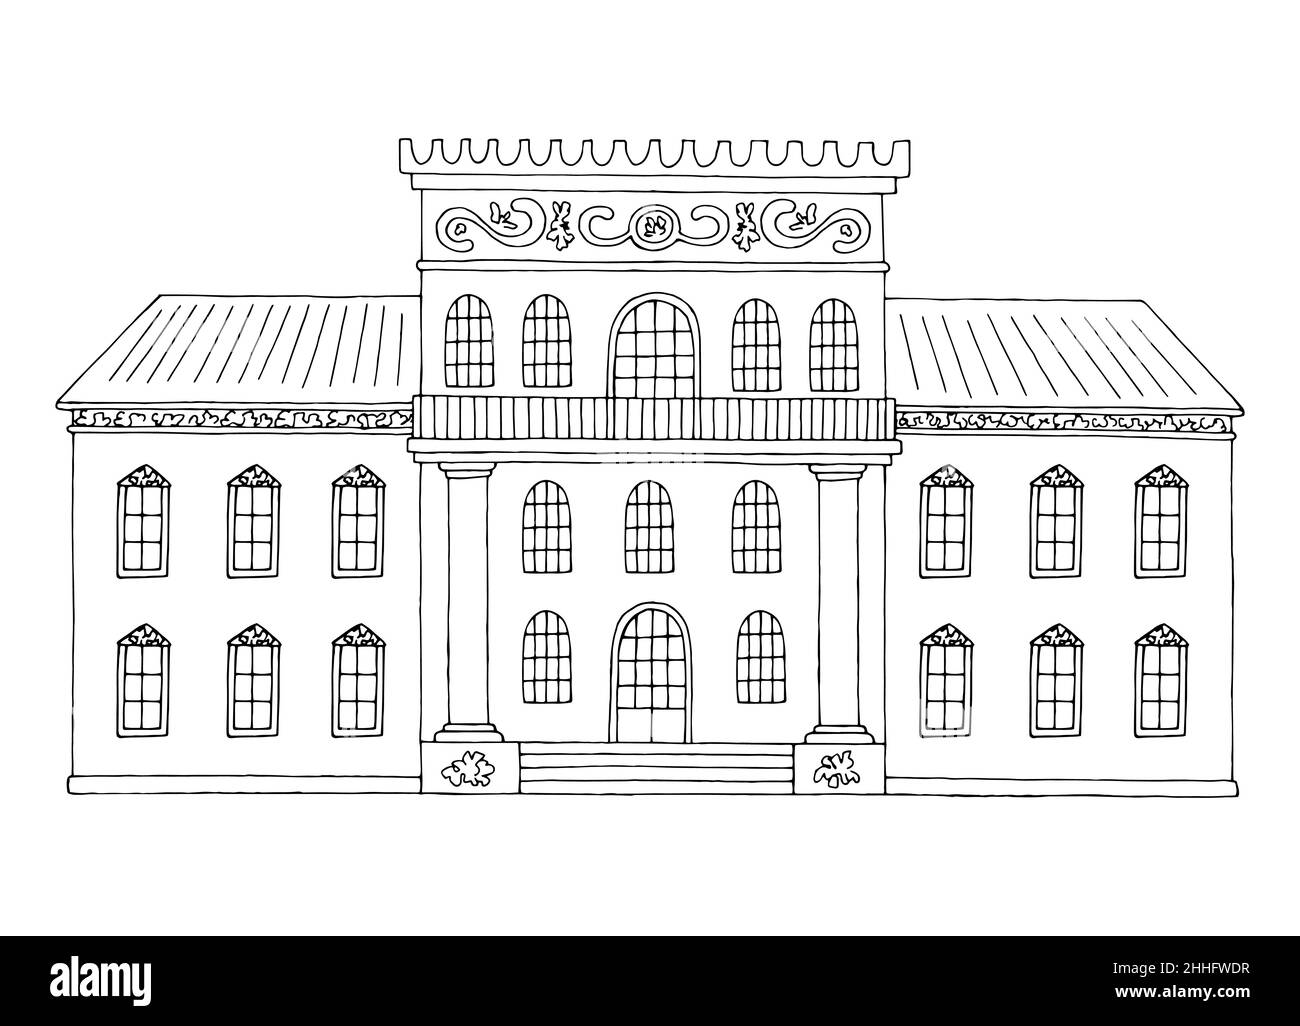 Palast Burg Grafik schwarz weiß isoliert Skizze Illustration Vektor Stock Vektor